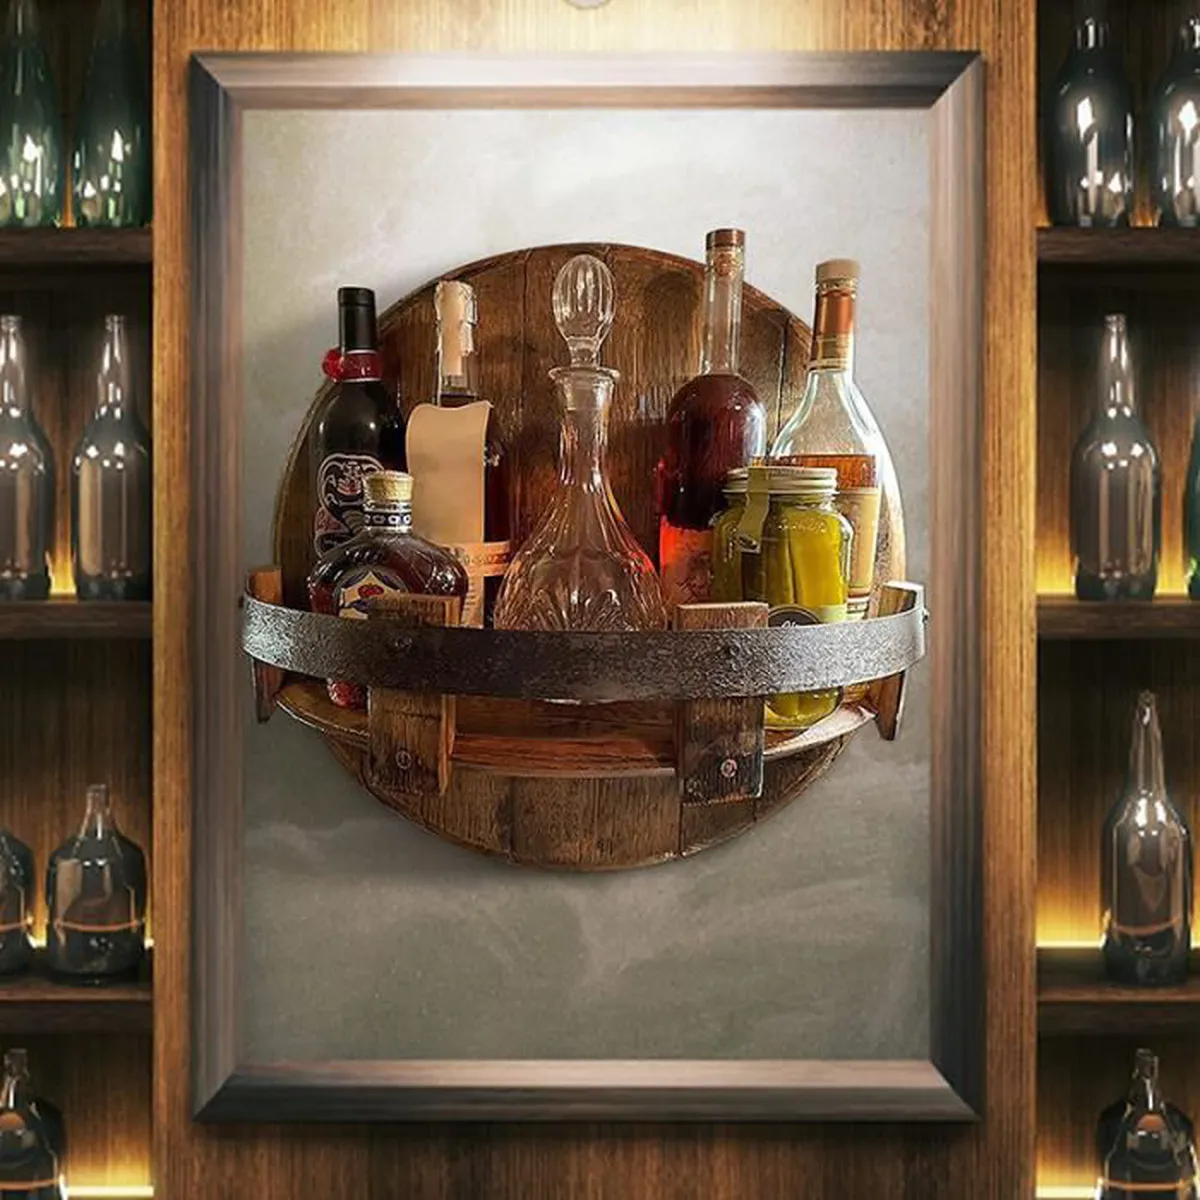 🔥New Year's Promotion 49% OFF - Bourbon Whiskey Barrel Shelf🍺